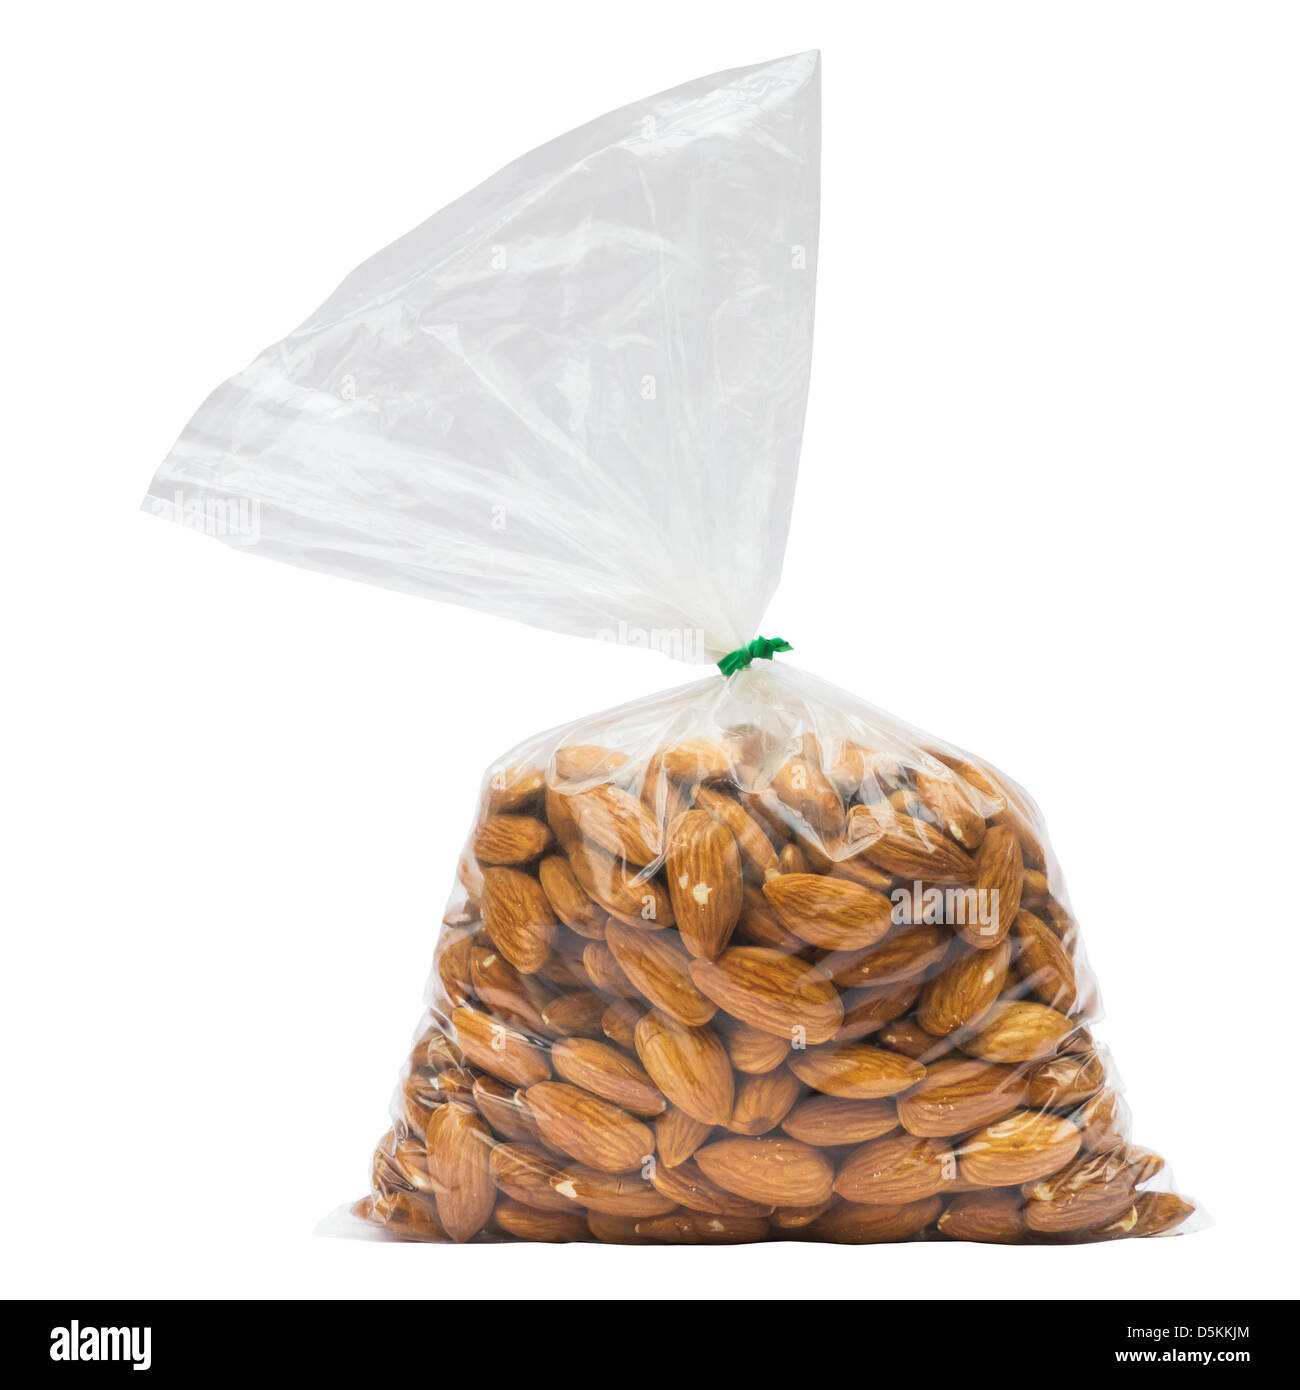 Almonds in Bag Stock Photo